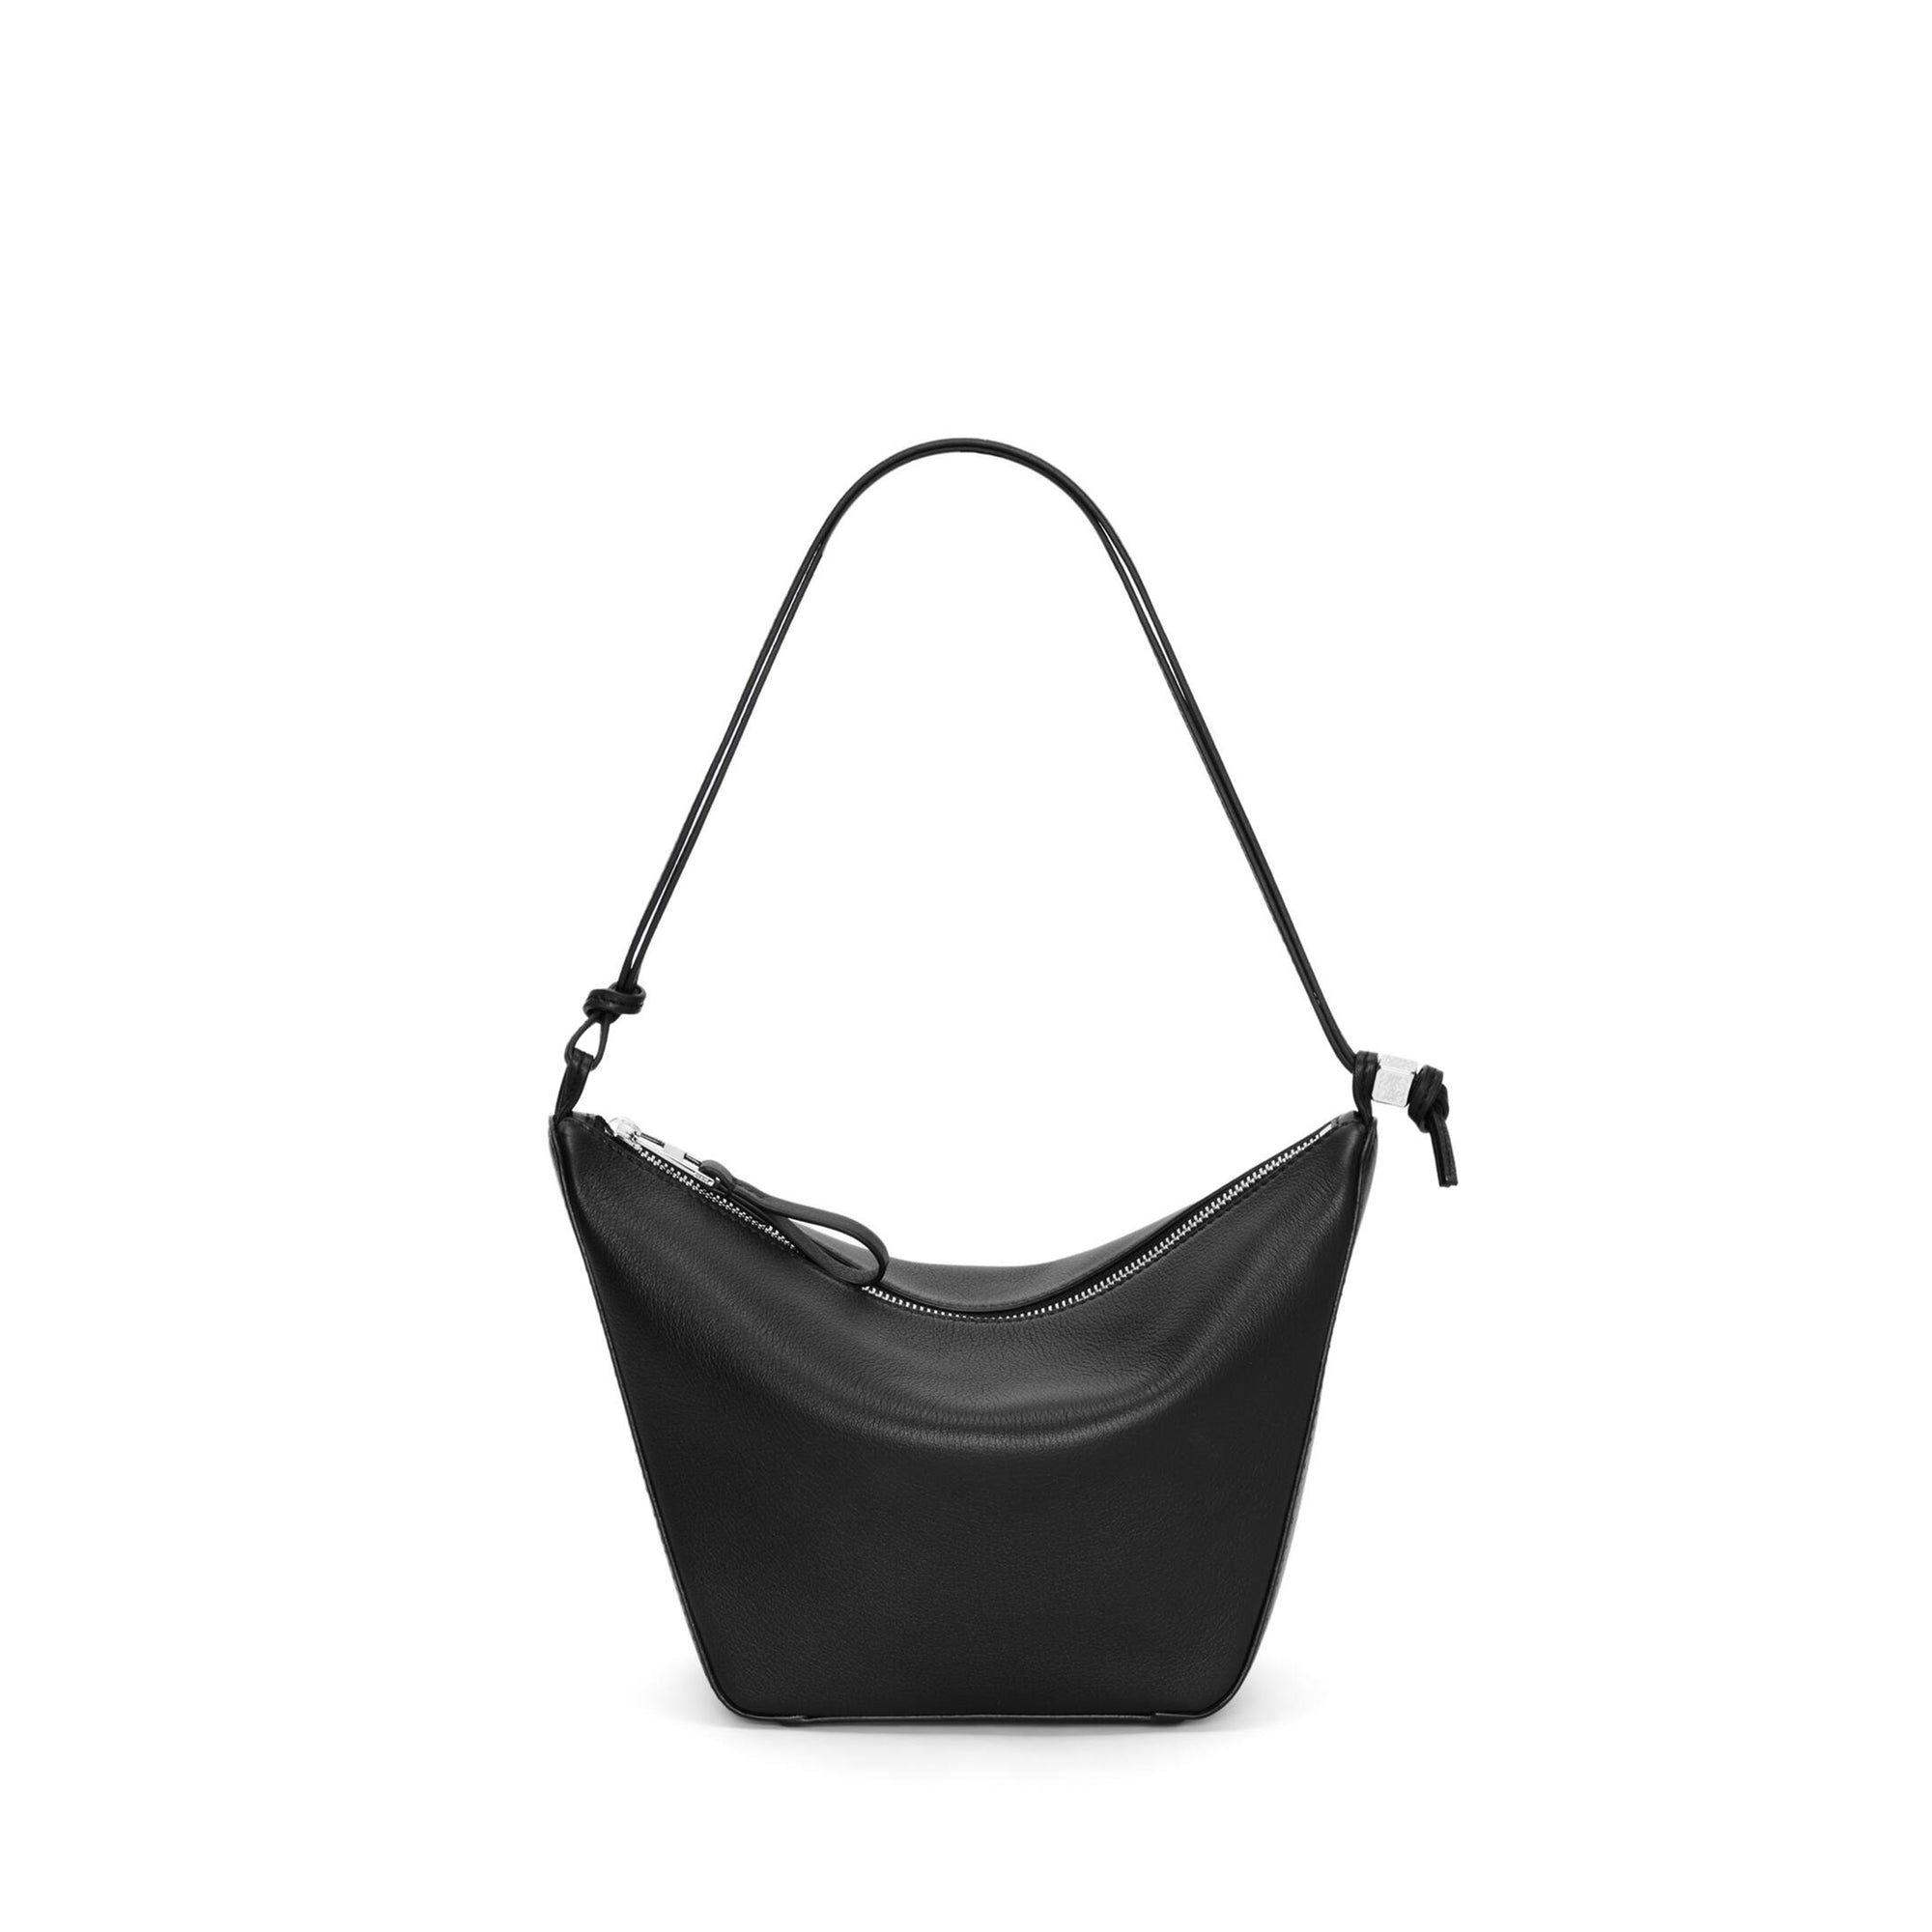 Loewe - Women’s Mini Hammock Bag  - (Black) view 1